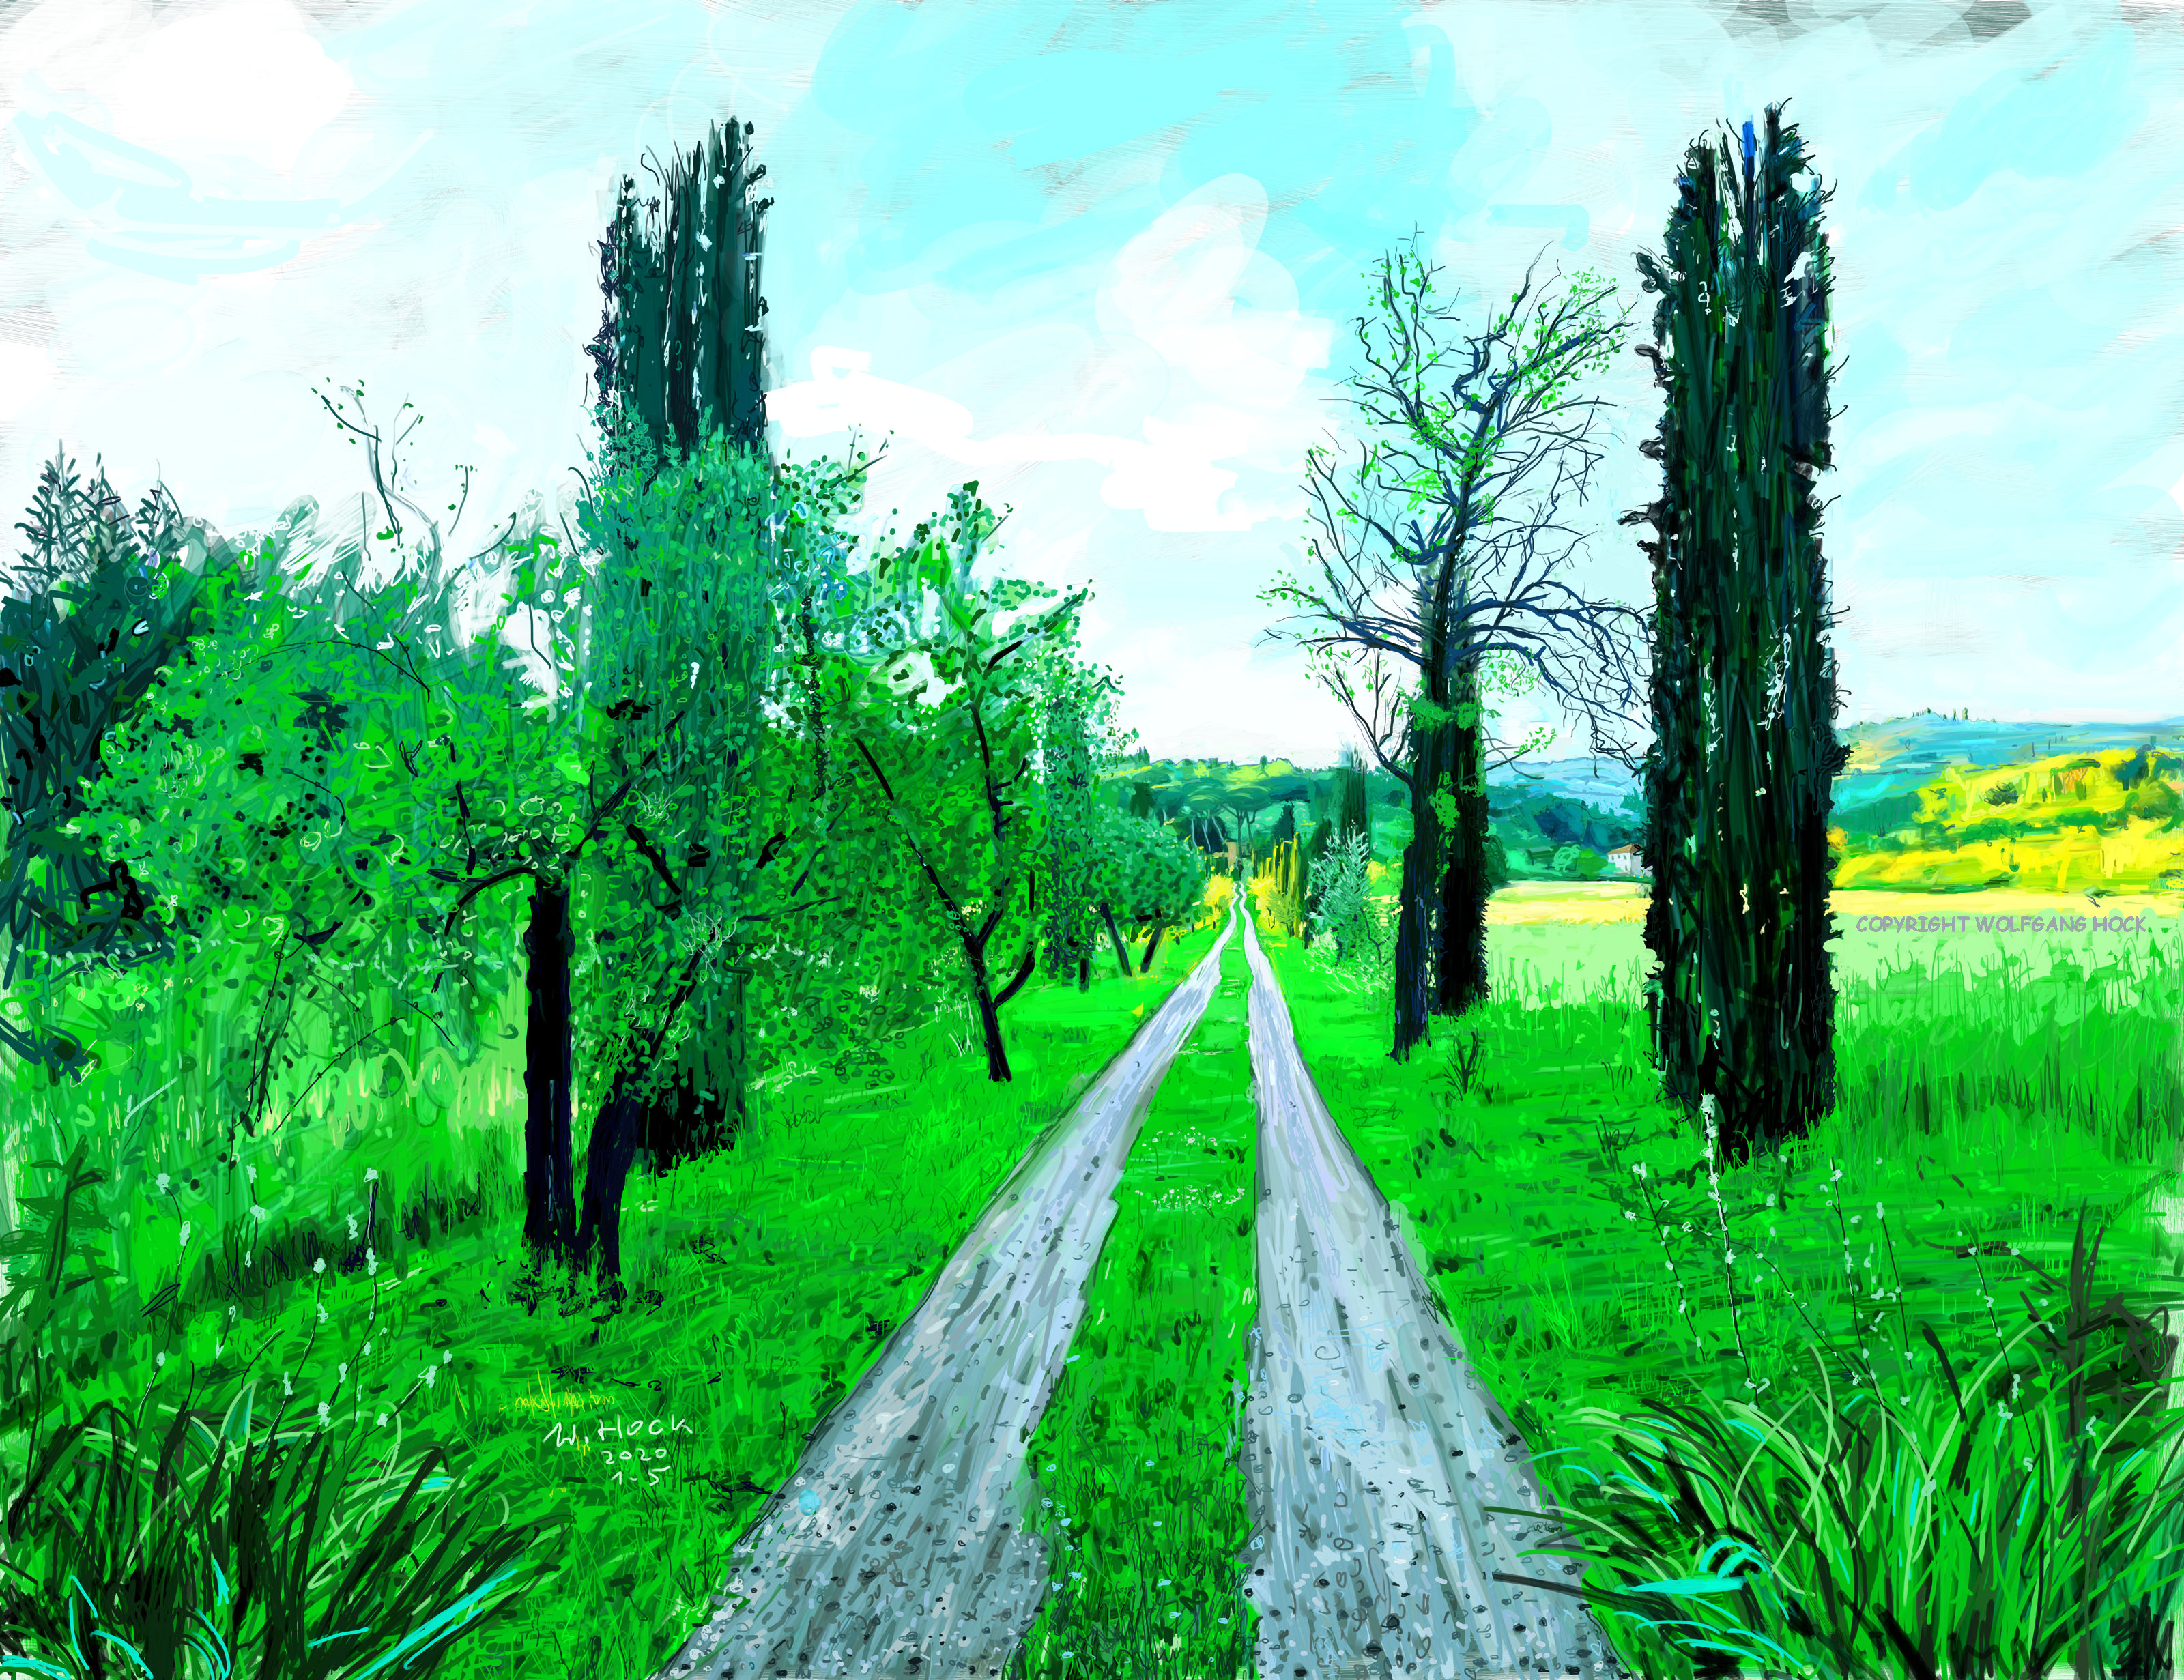 Der Weg (Toscana) - The path (Tuscany) - O caminho (Toscana) 2020   Handmade digital painting on canvas 170 x 130 cm (206 megapixels)